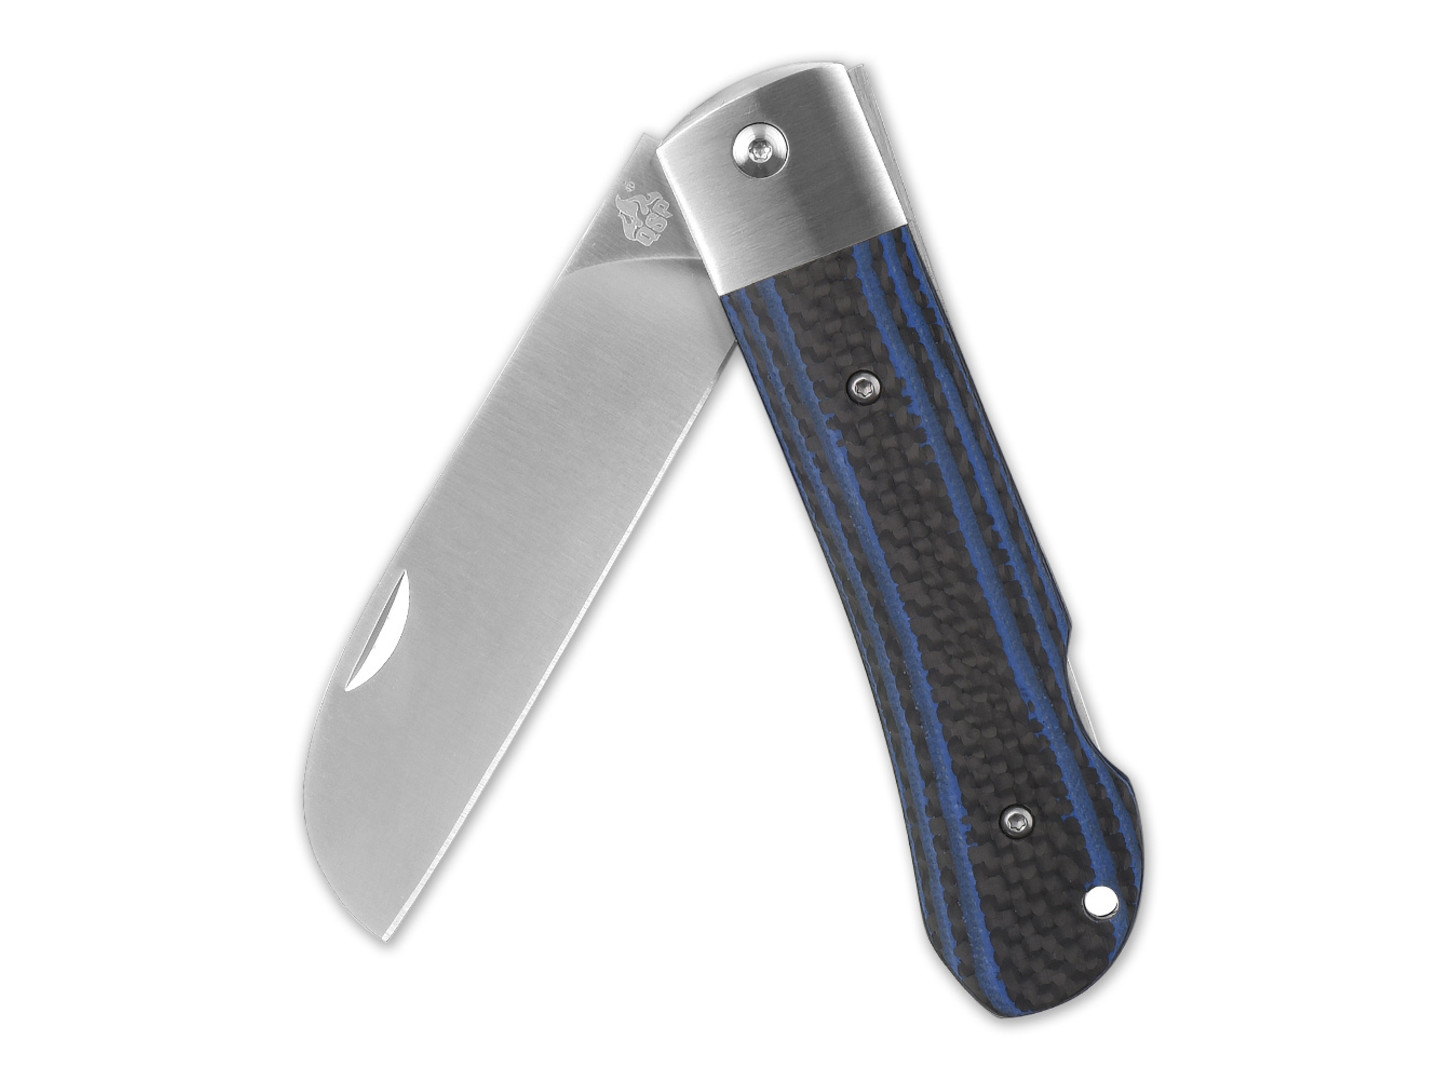 Нож QSP Worker QS128-D сталь N690, рукоять синяя G10, карбон, кожаный чехол